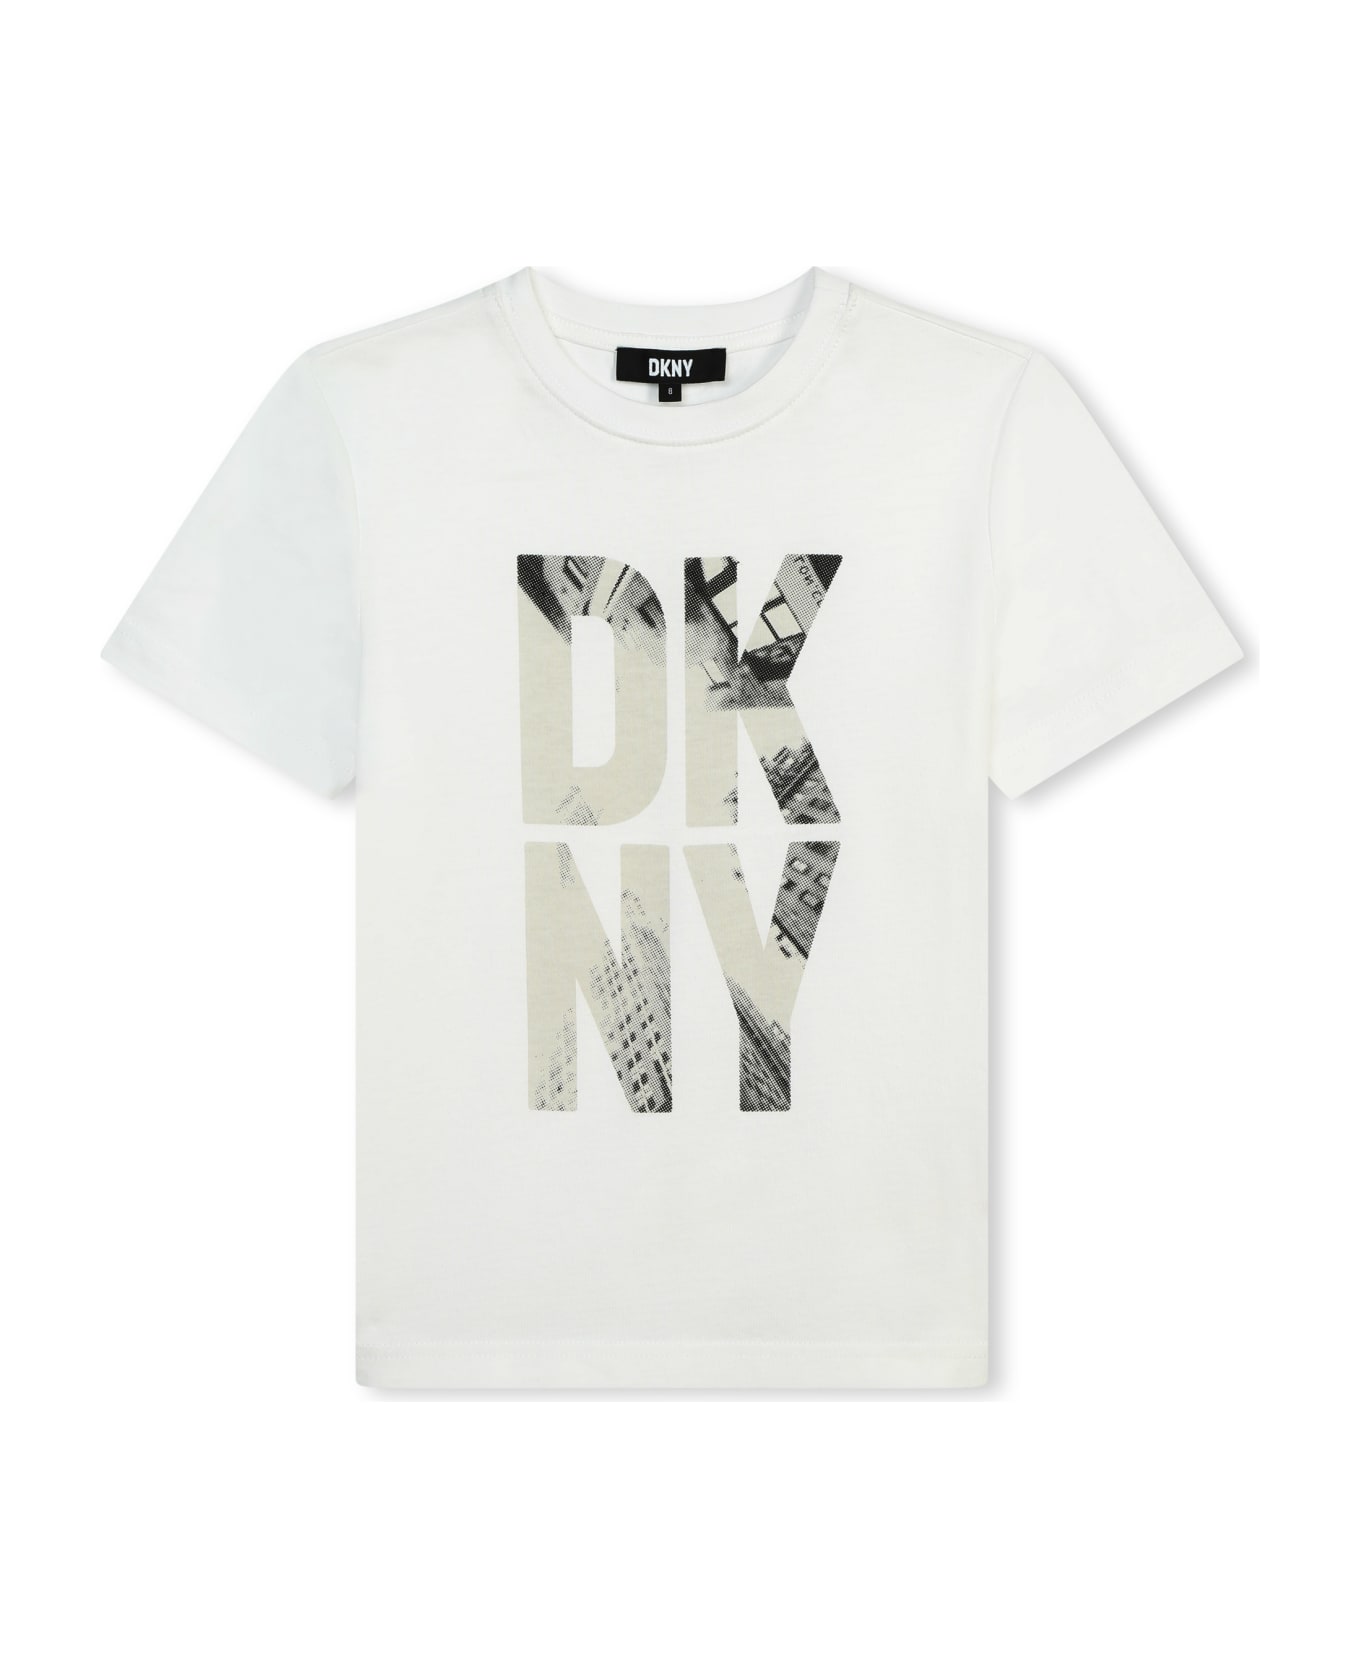 DKNY T-shirt With Print - White ジャンプスーツ